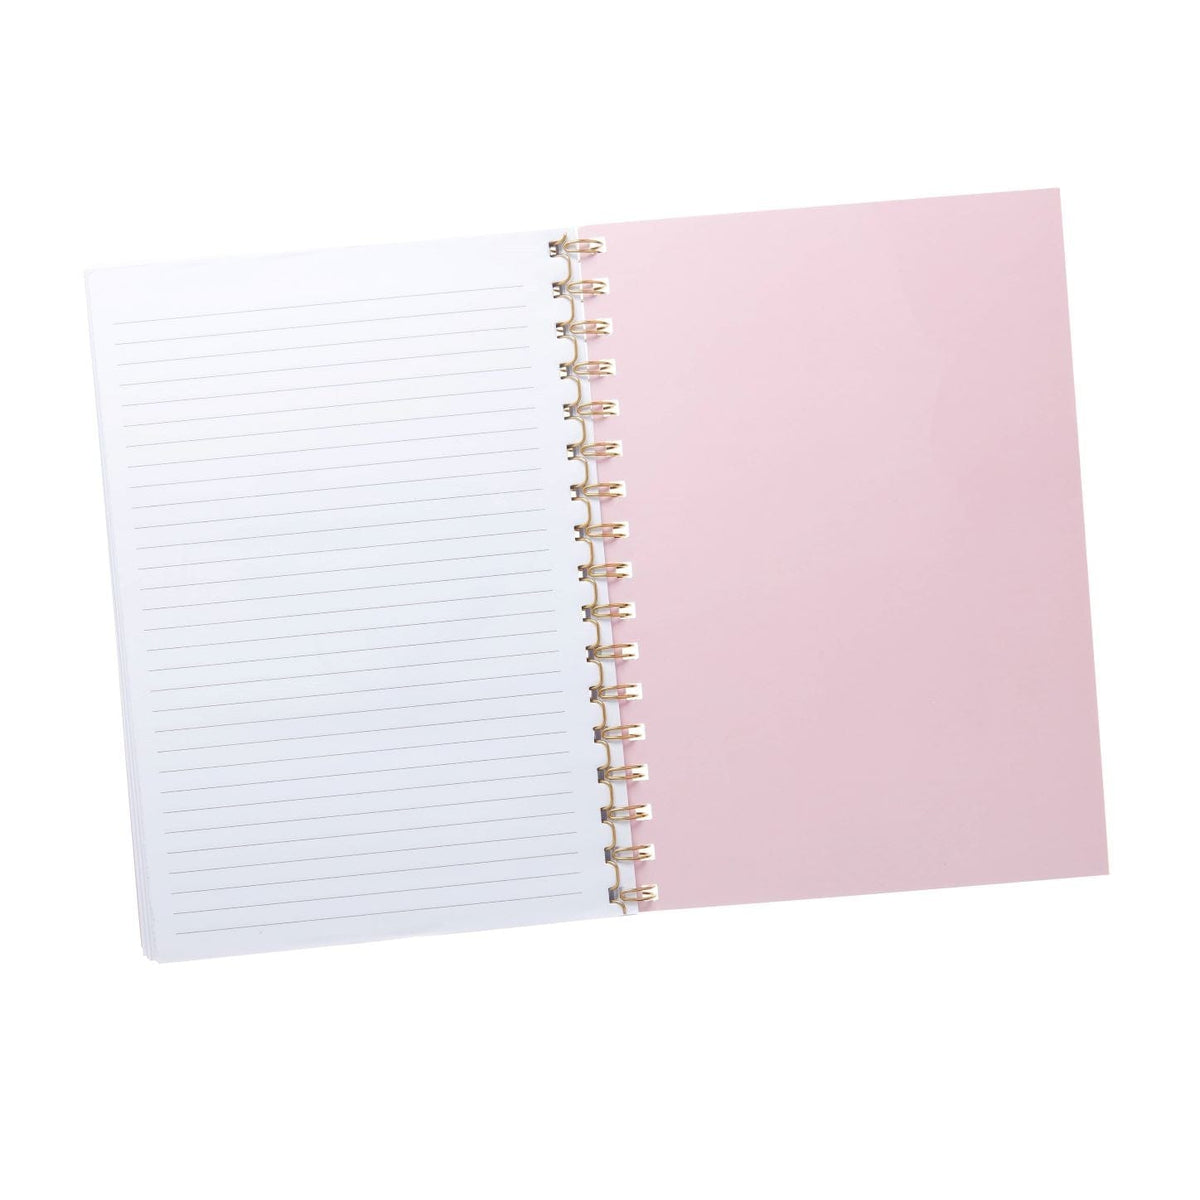 Splat Notebook Gartner Studios Notebooks 91481